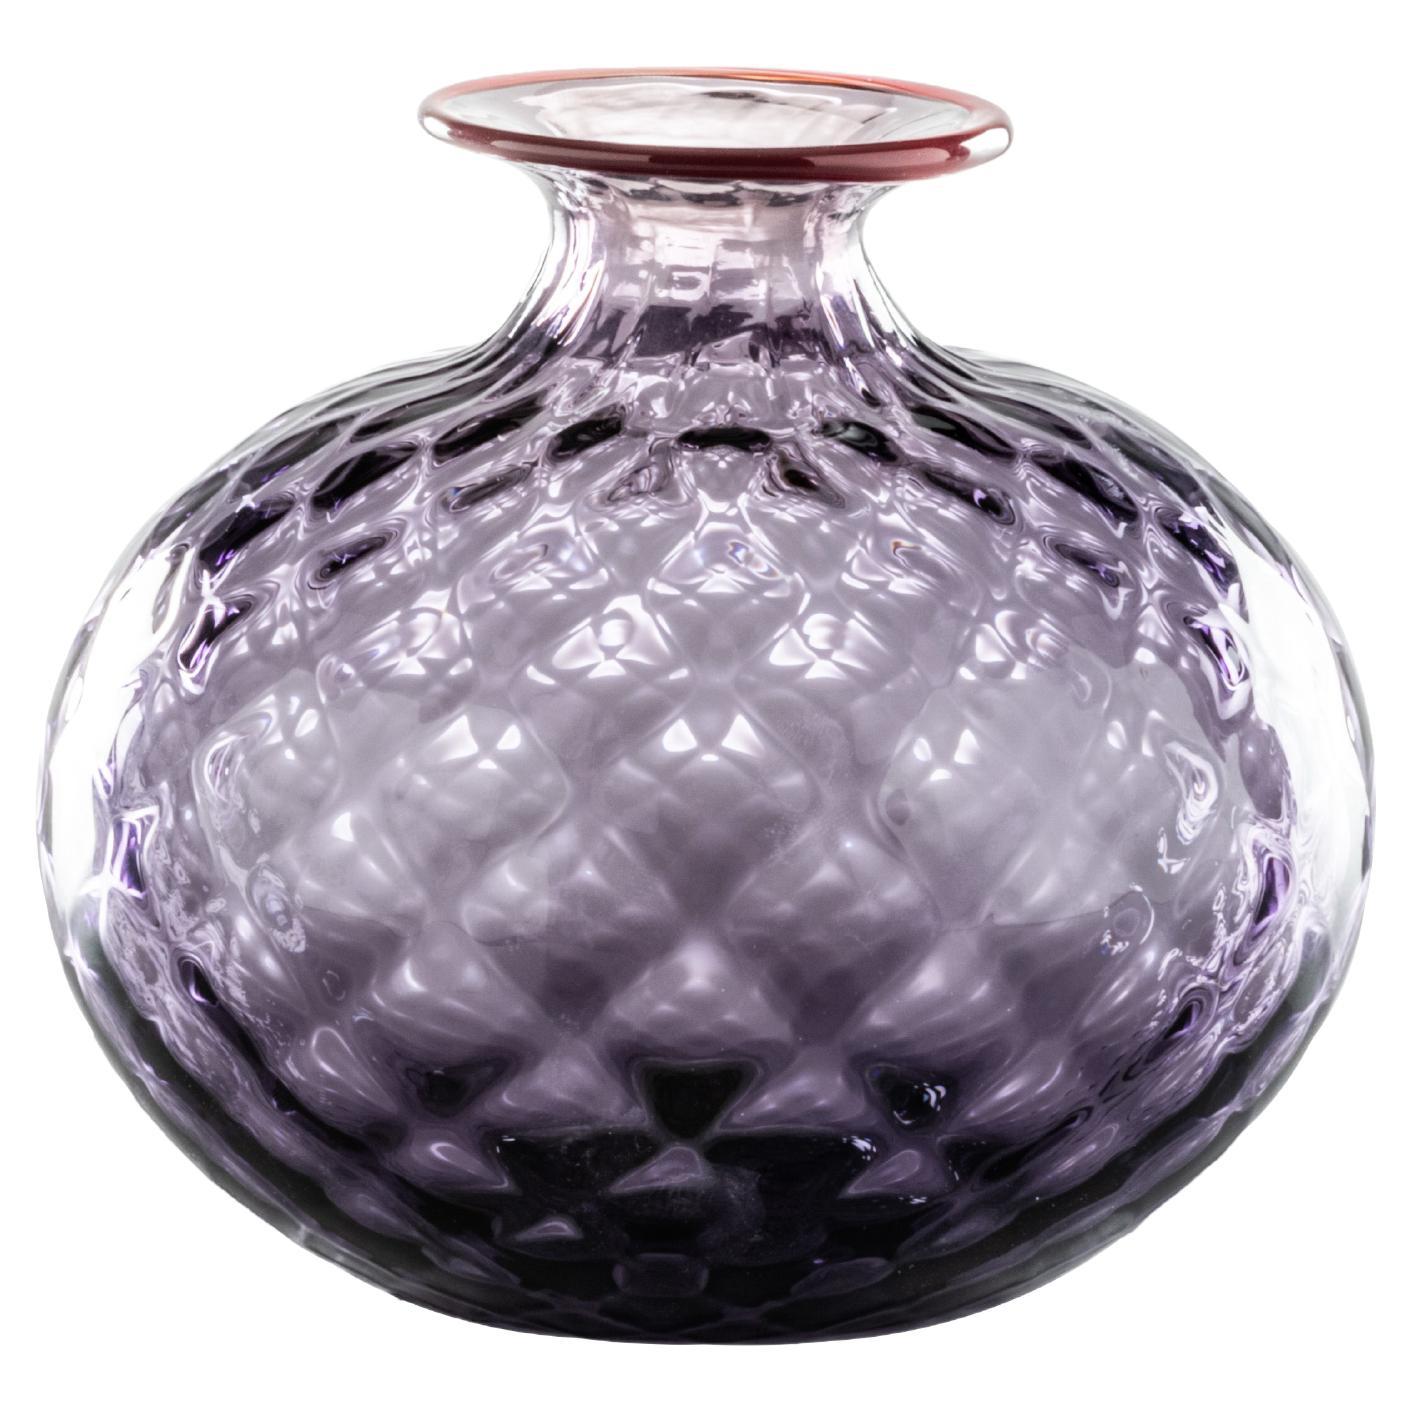 Monofiore Balaton Short Glass Vase in Indigo Red Thread Rim by Venini